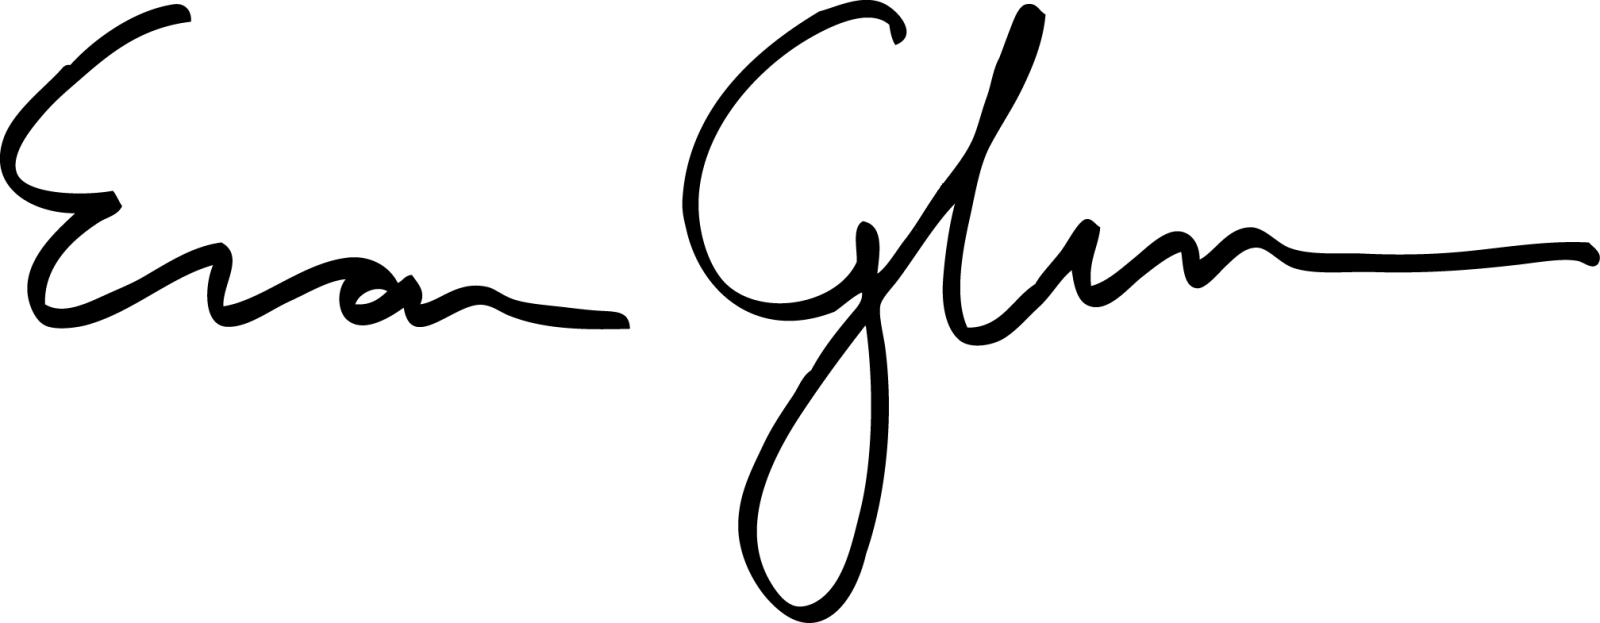 Glass signature